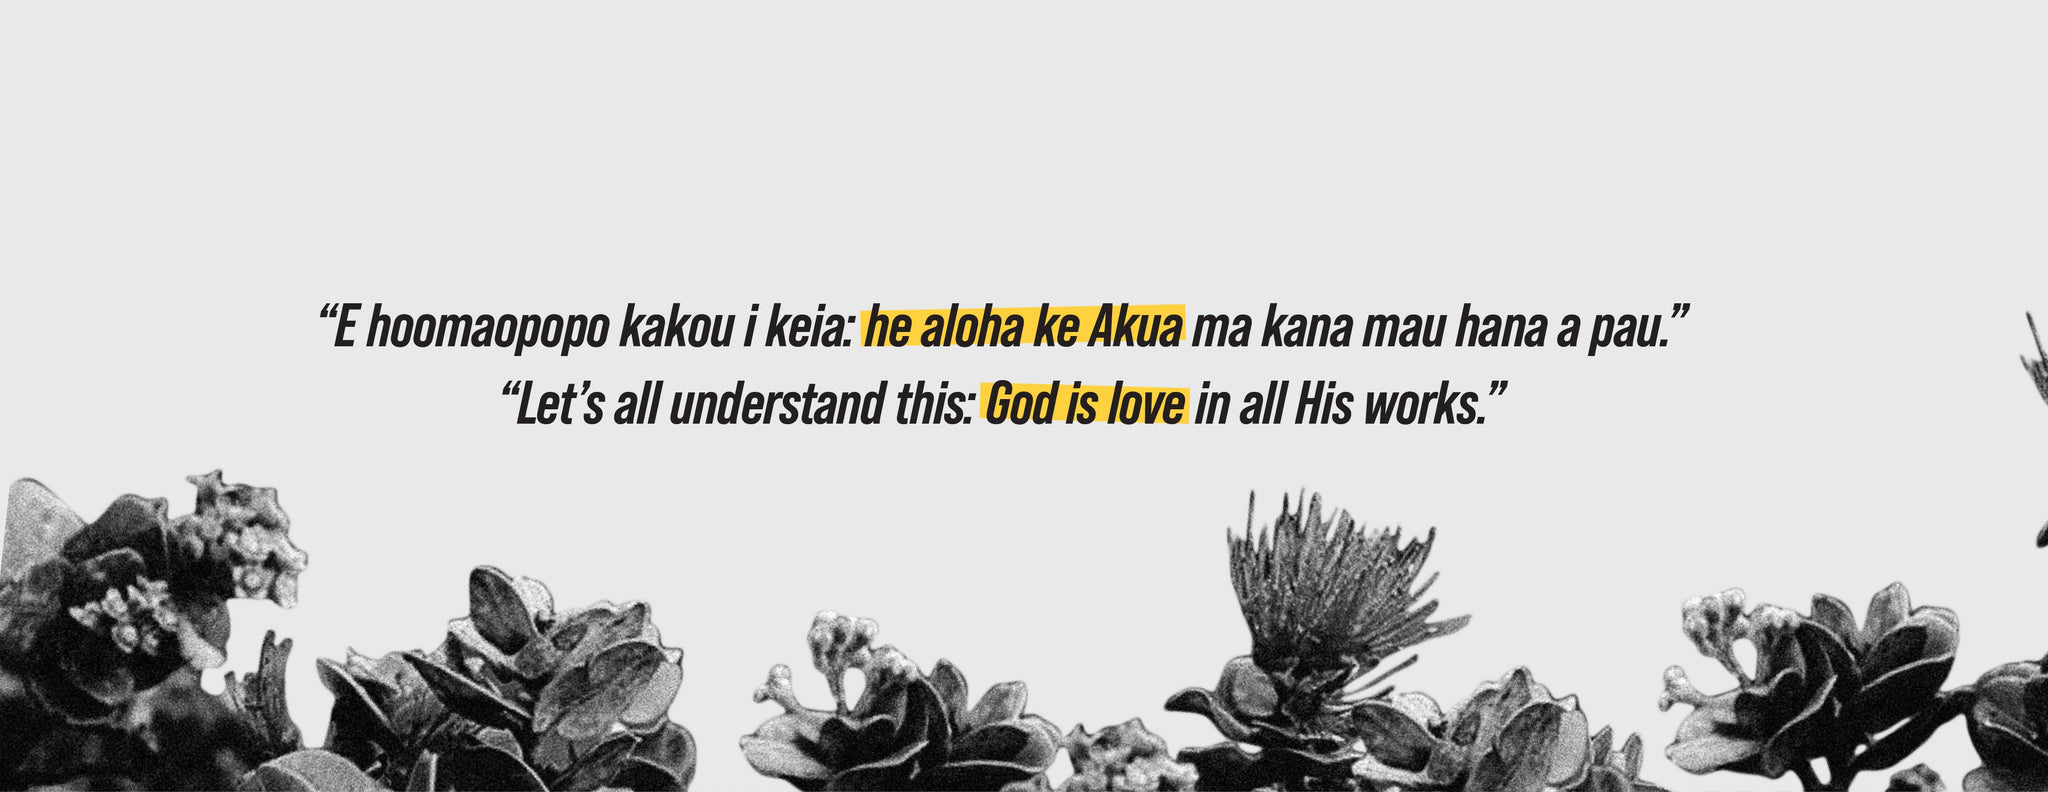 Hawaiian Language description of the Value of Aloha Ke Akua